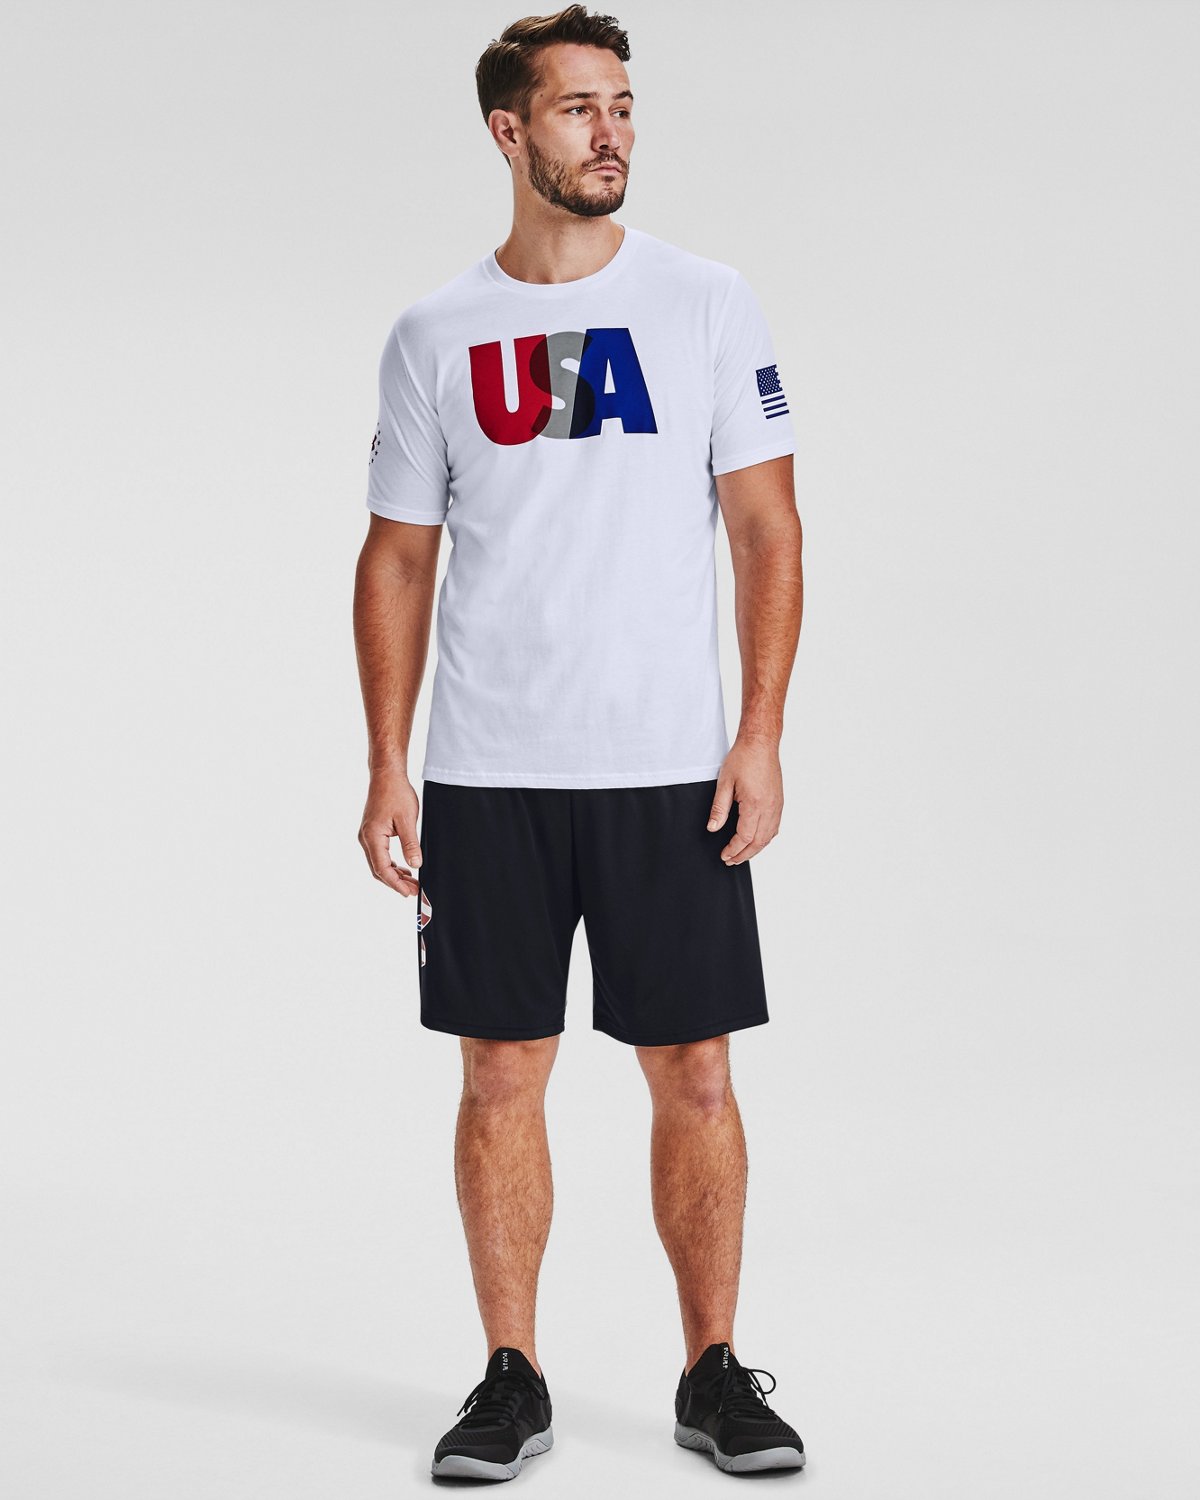 Under Armour Men's Freedom USA Olympic Short Sleeve T-shirt | Academy